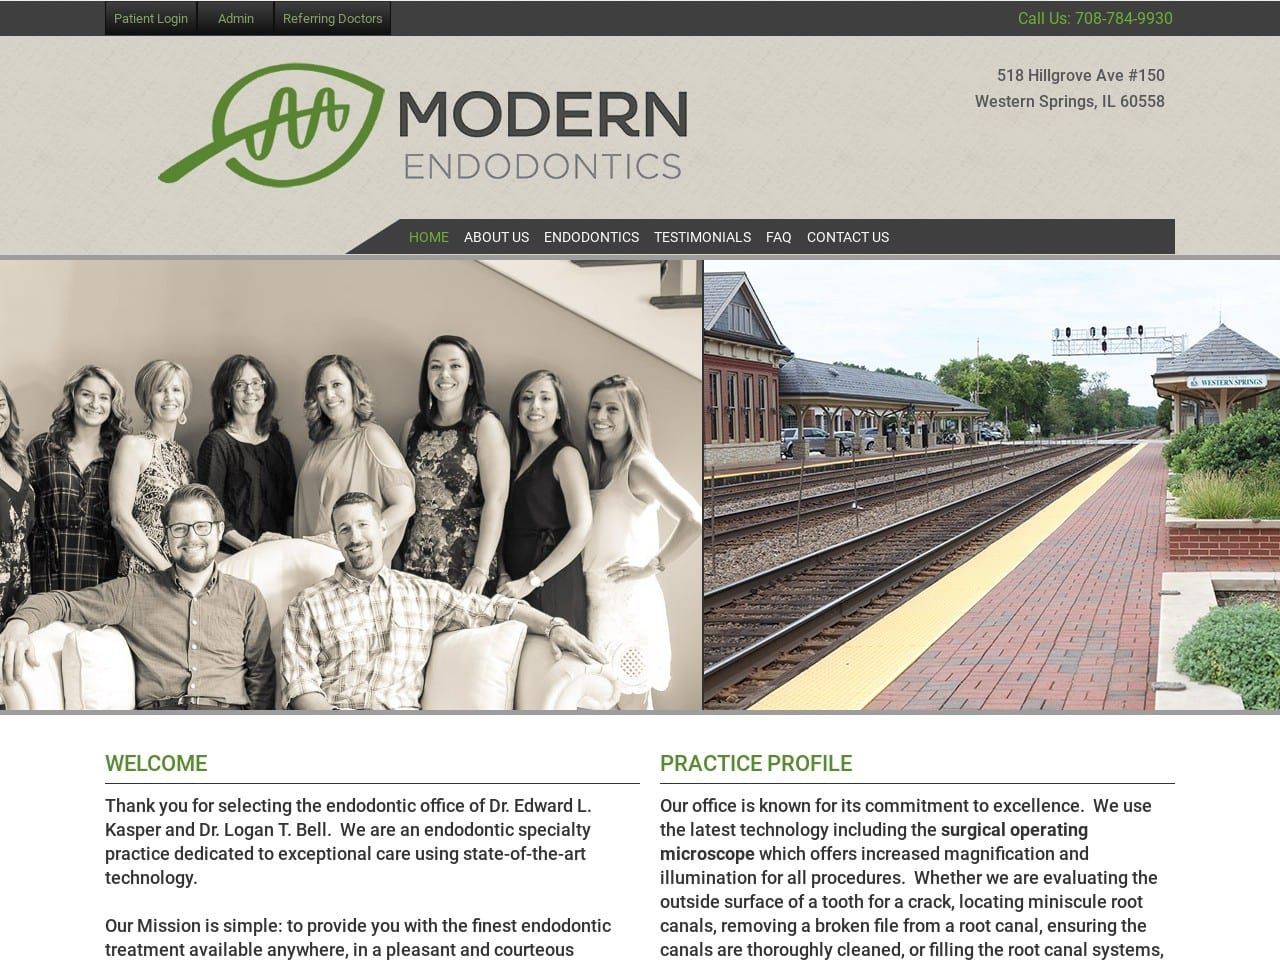 Modern Endodontics Website Screenshot from modernendo.com